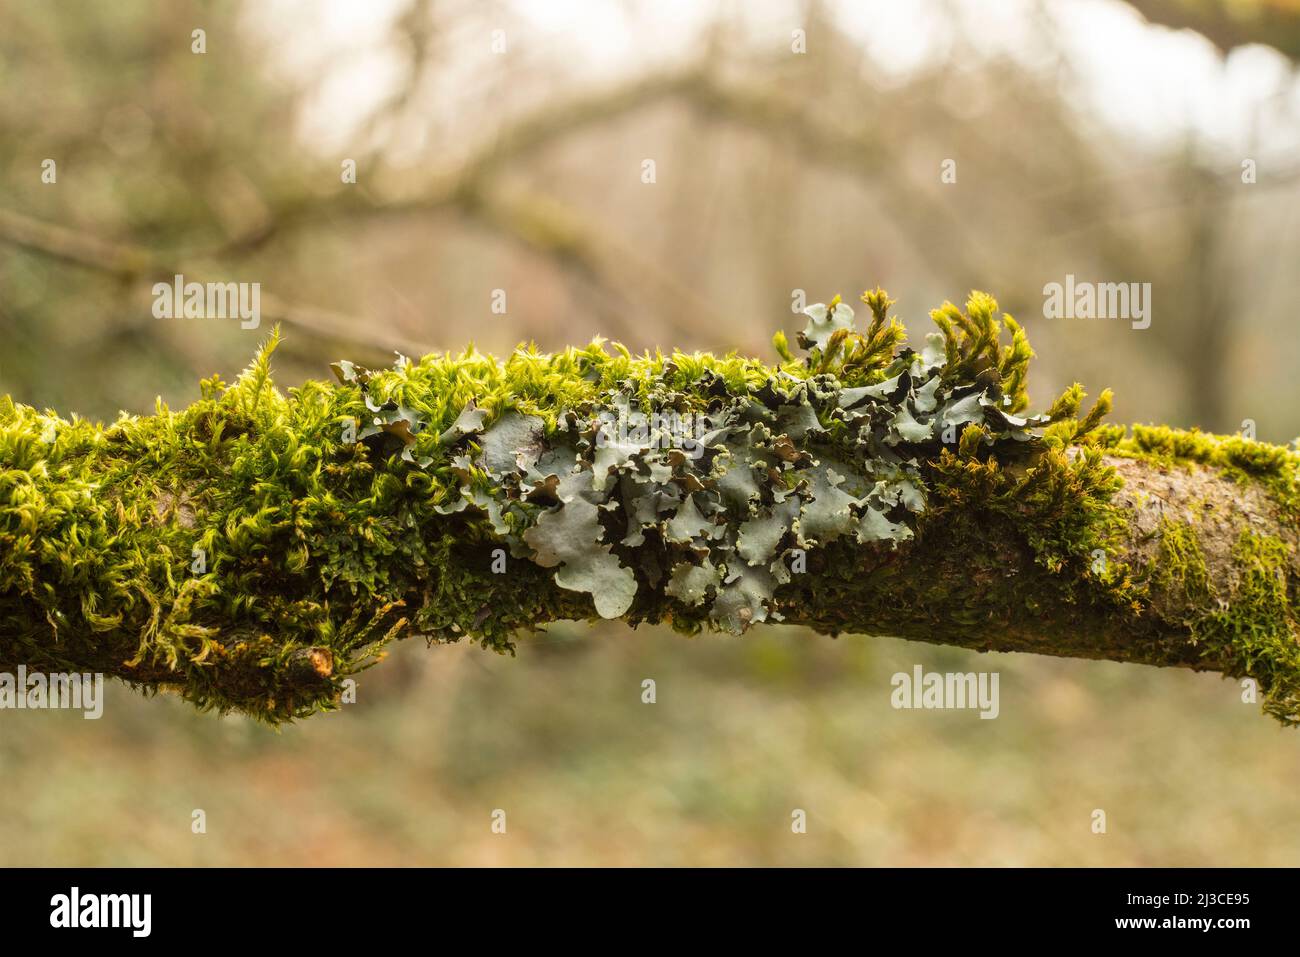 Parmotrema perlatum, a foliose lichen, and Elegant Bristle-moss, Orthotrichum pulchellum, on a tree branch in Southampton, England Stock Photo